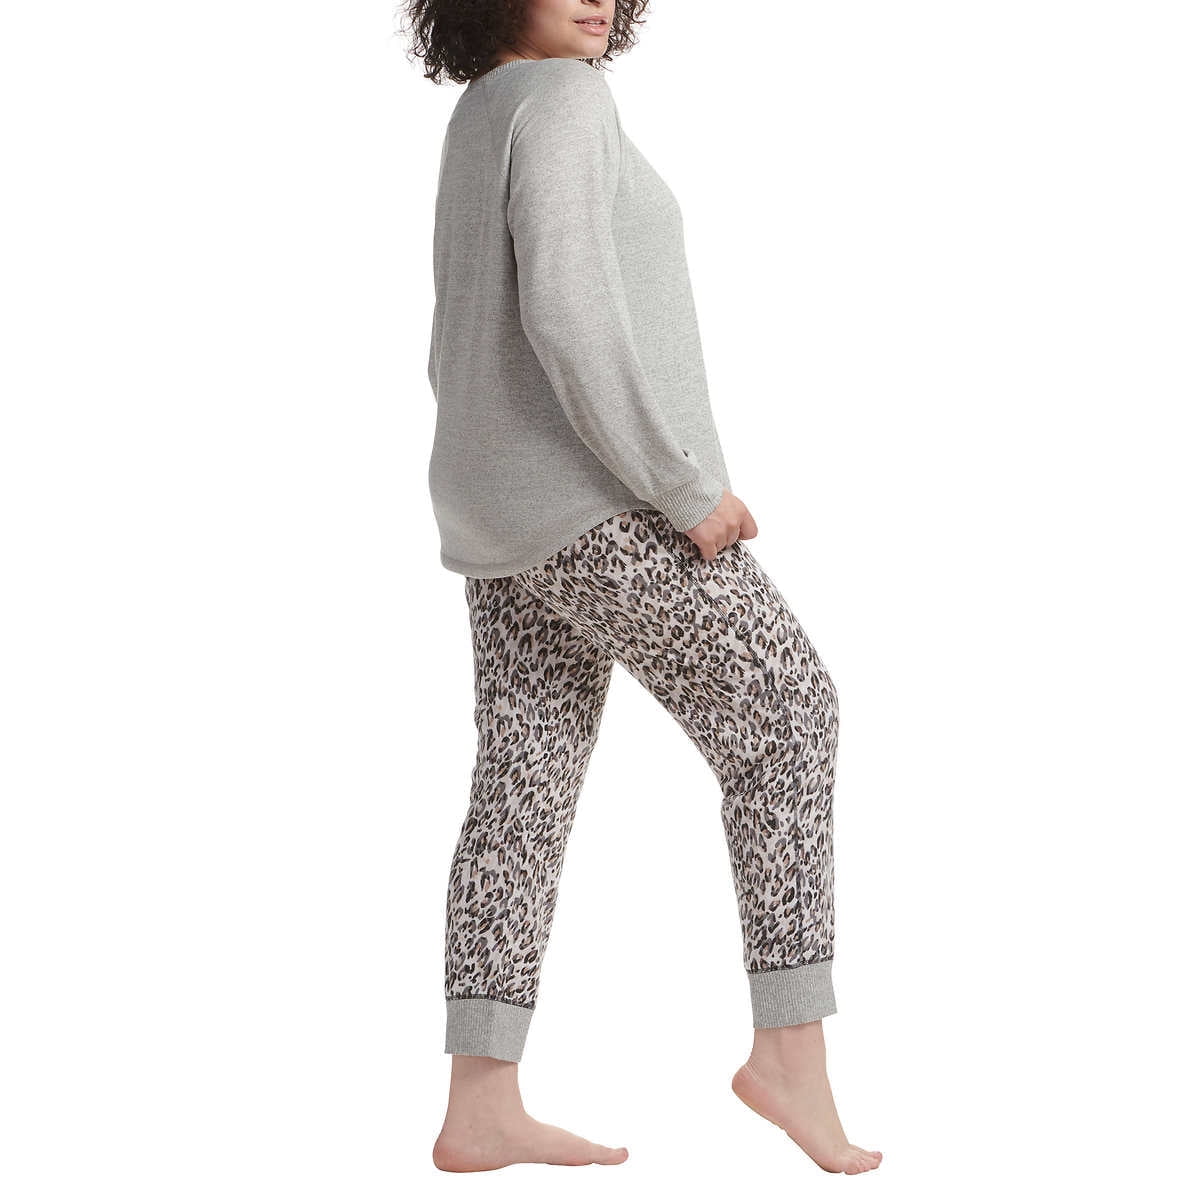 Karen Neuburger womens Cozy Lounge Pajama Set, Charcoal Painted